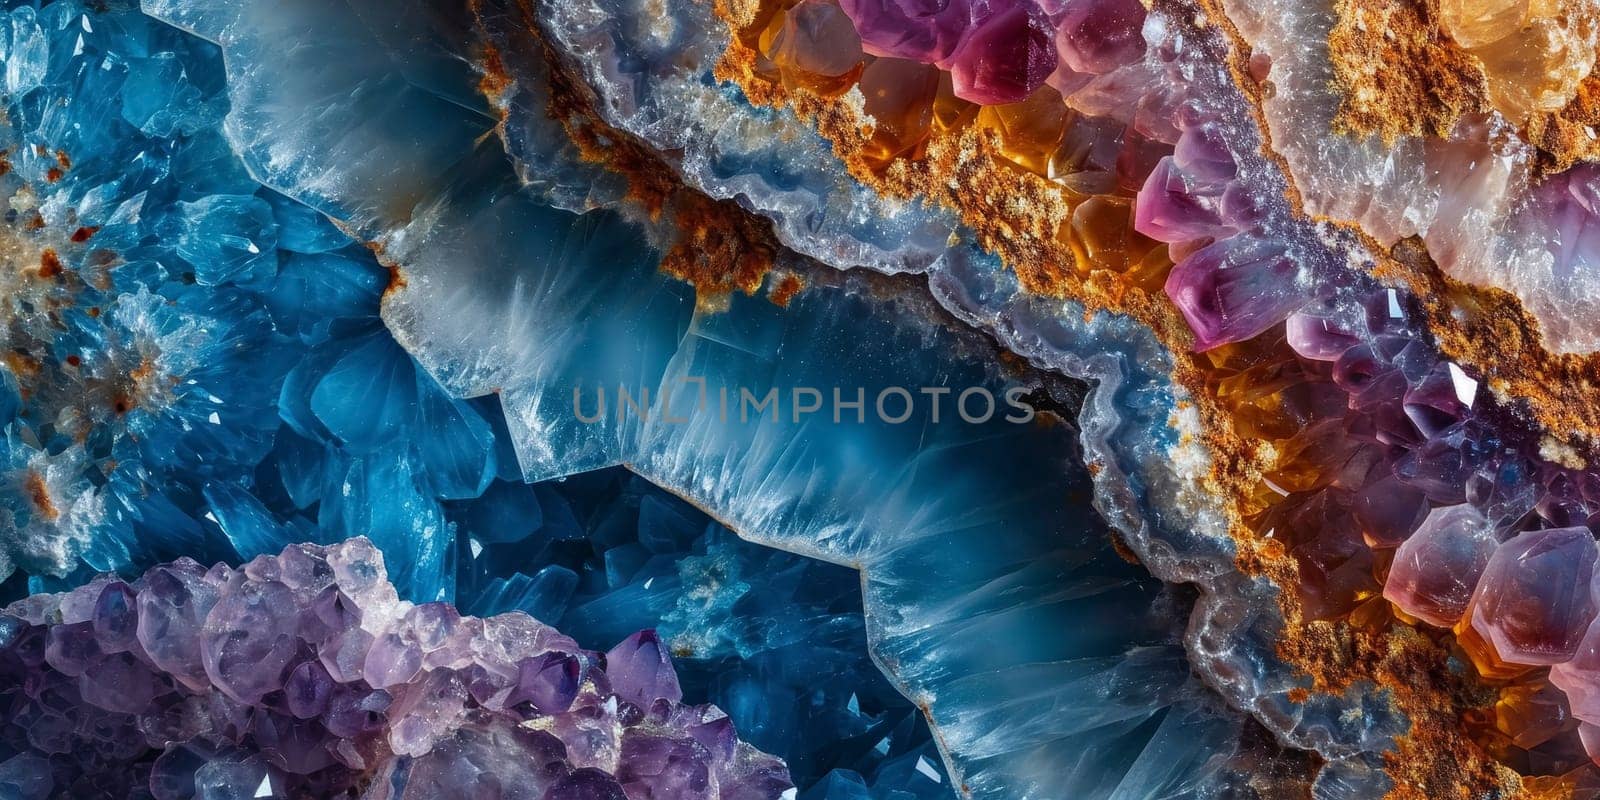 Close-up of vivid mineral crystals with rich hues